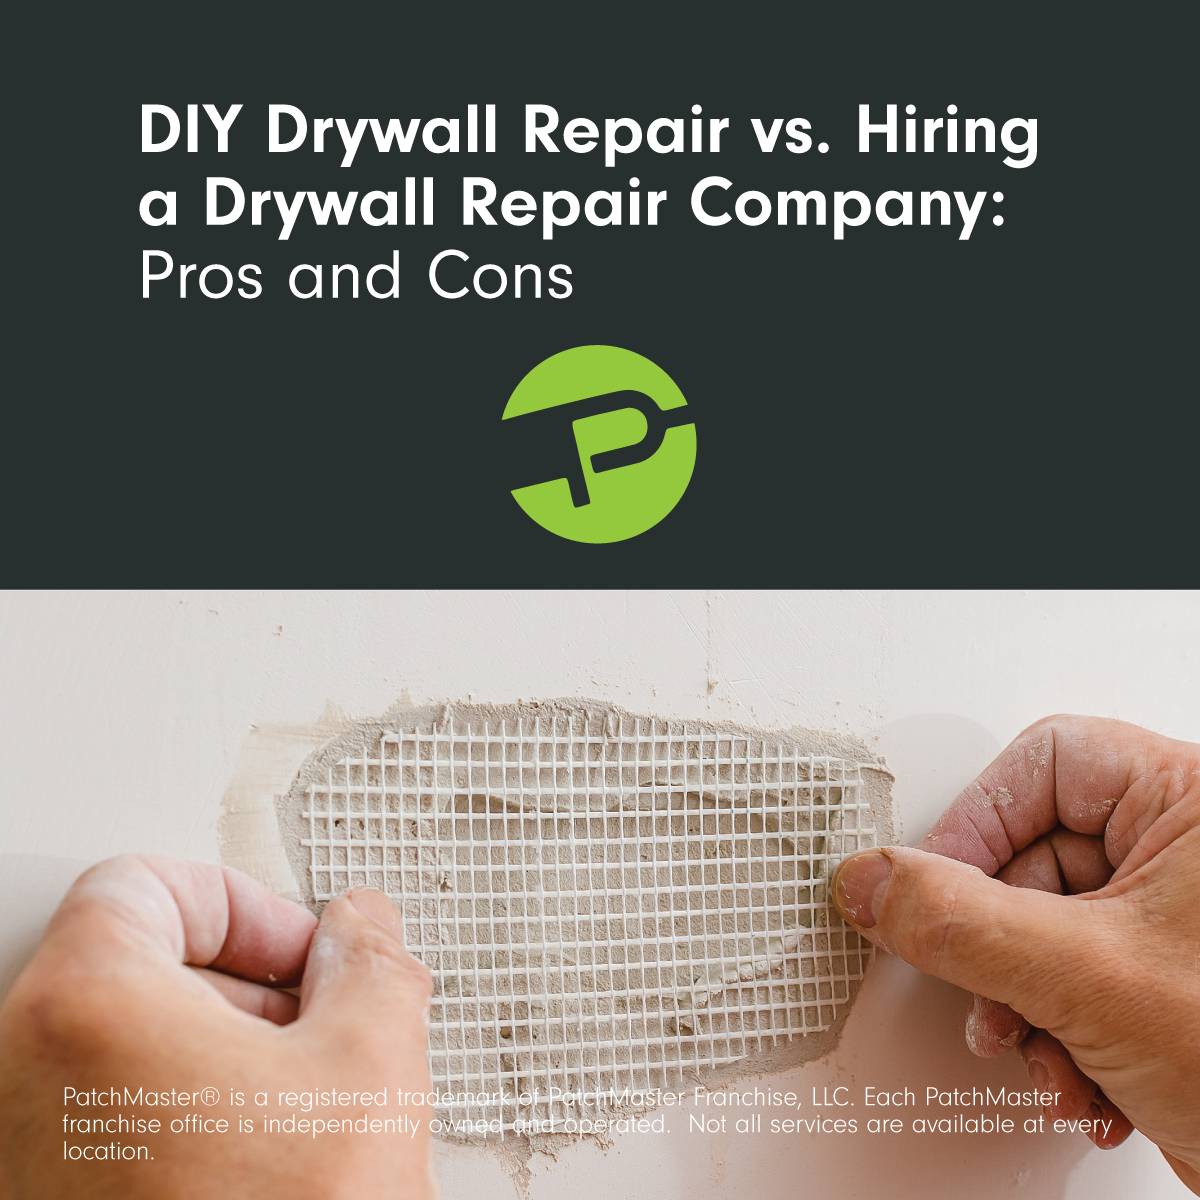 DIY Drywall Repair vs. Hiring a Drywall Repair Company: Pros and Cons